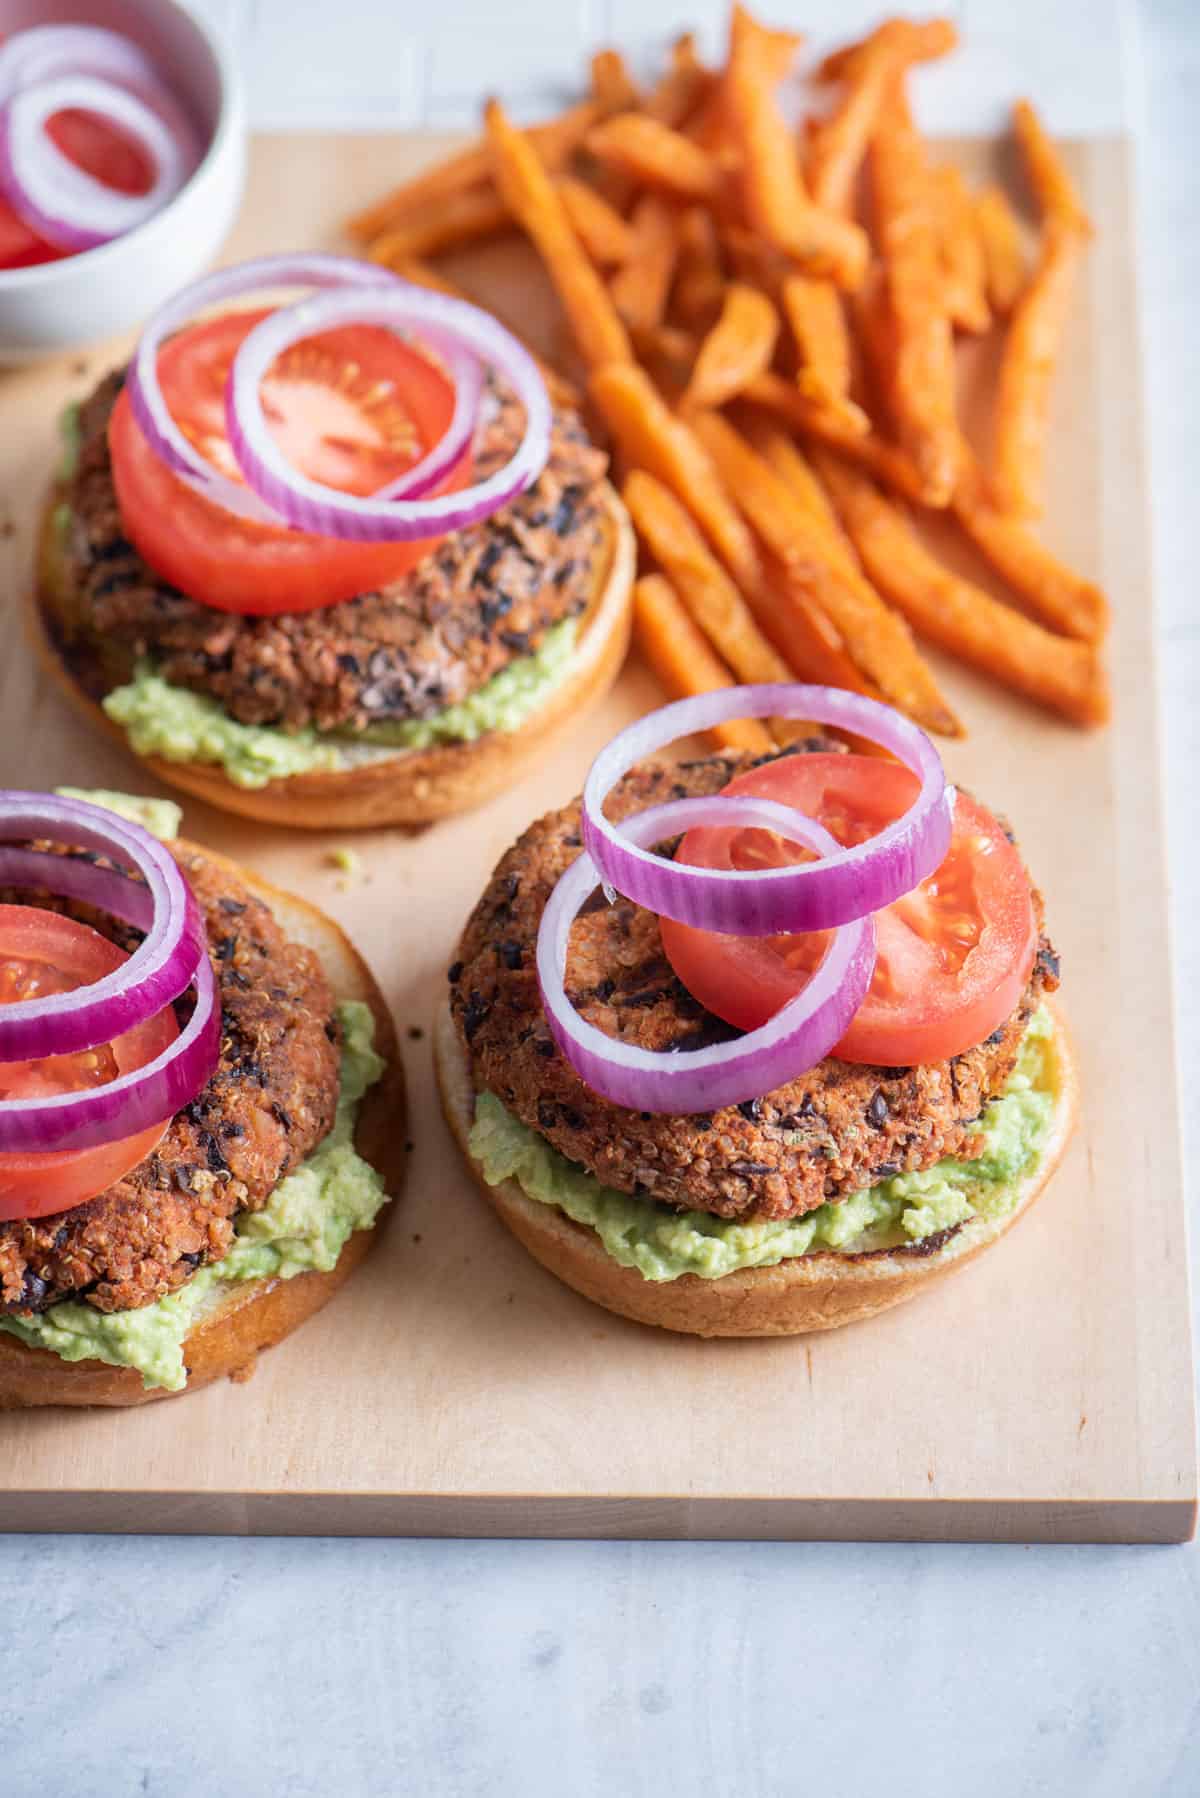 This vegan quinoa burger on a wood plank